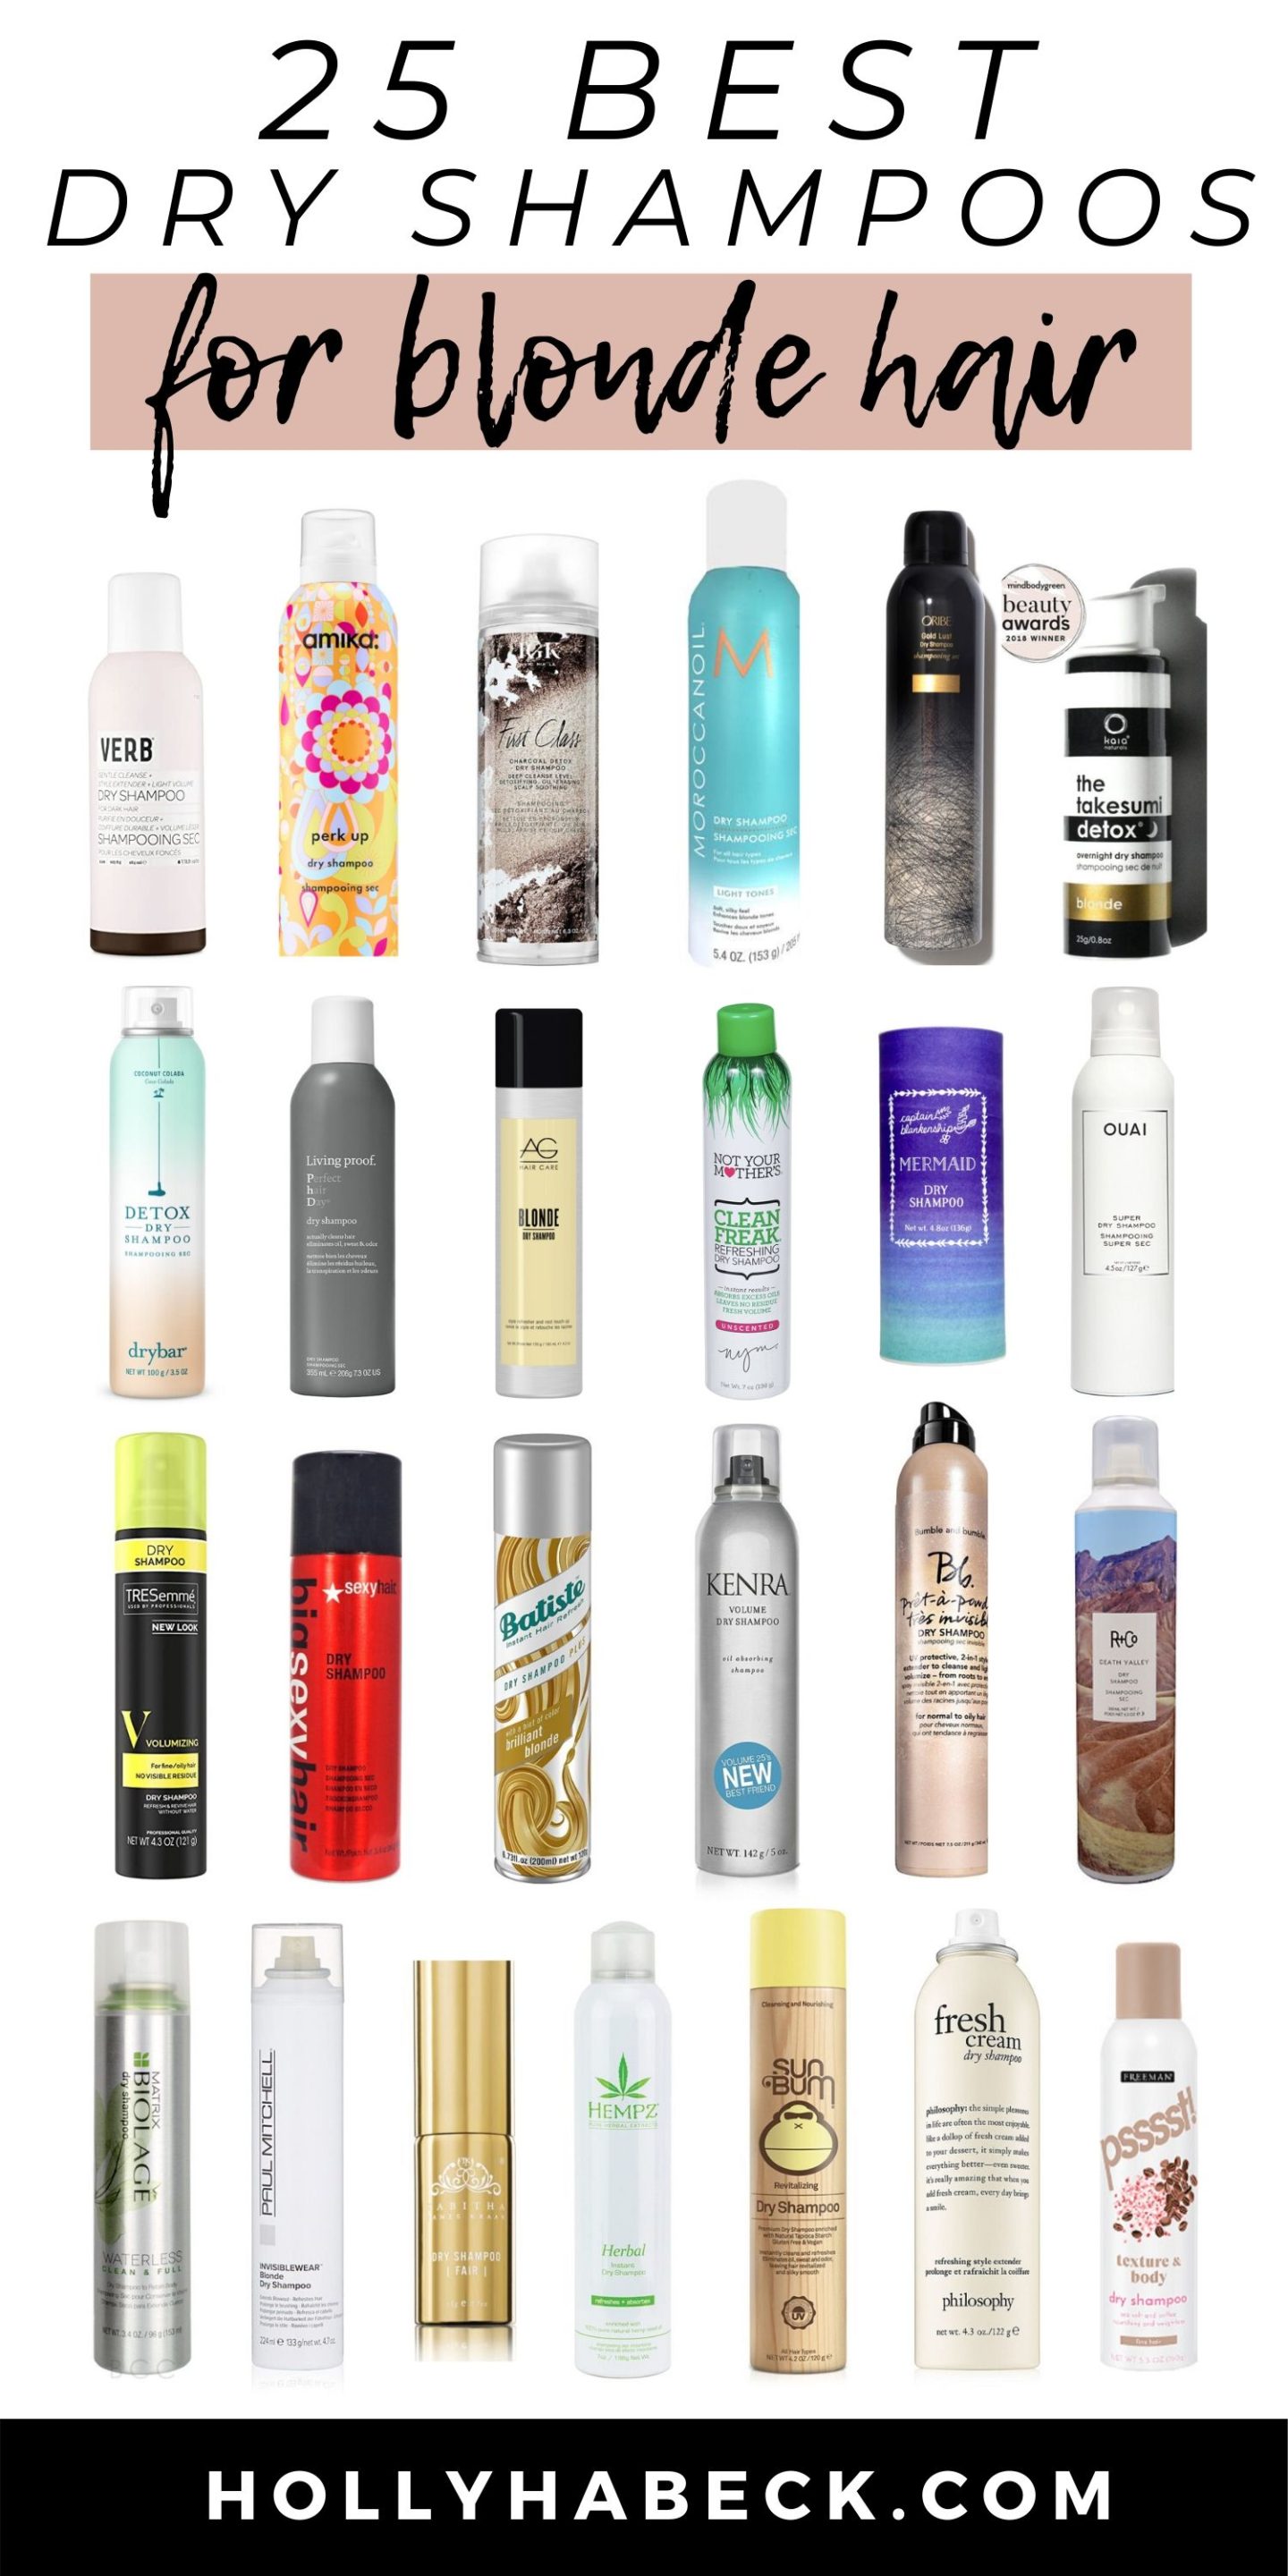 byrde Sump grundigt 25 Best Dry Shampoos for Blonde Hair - Holly Habeck